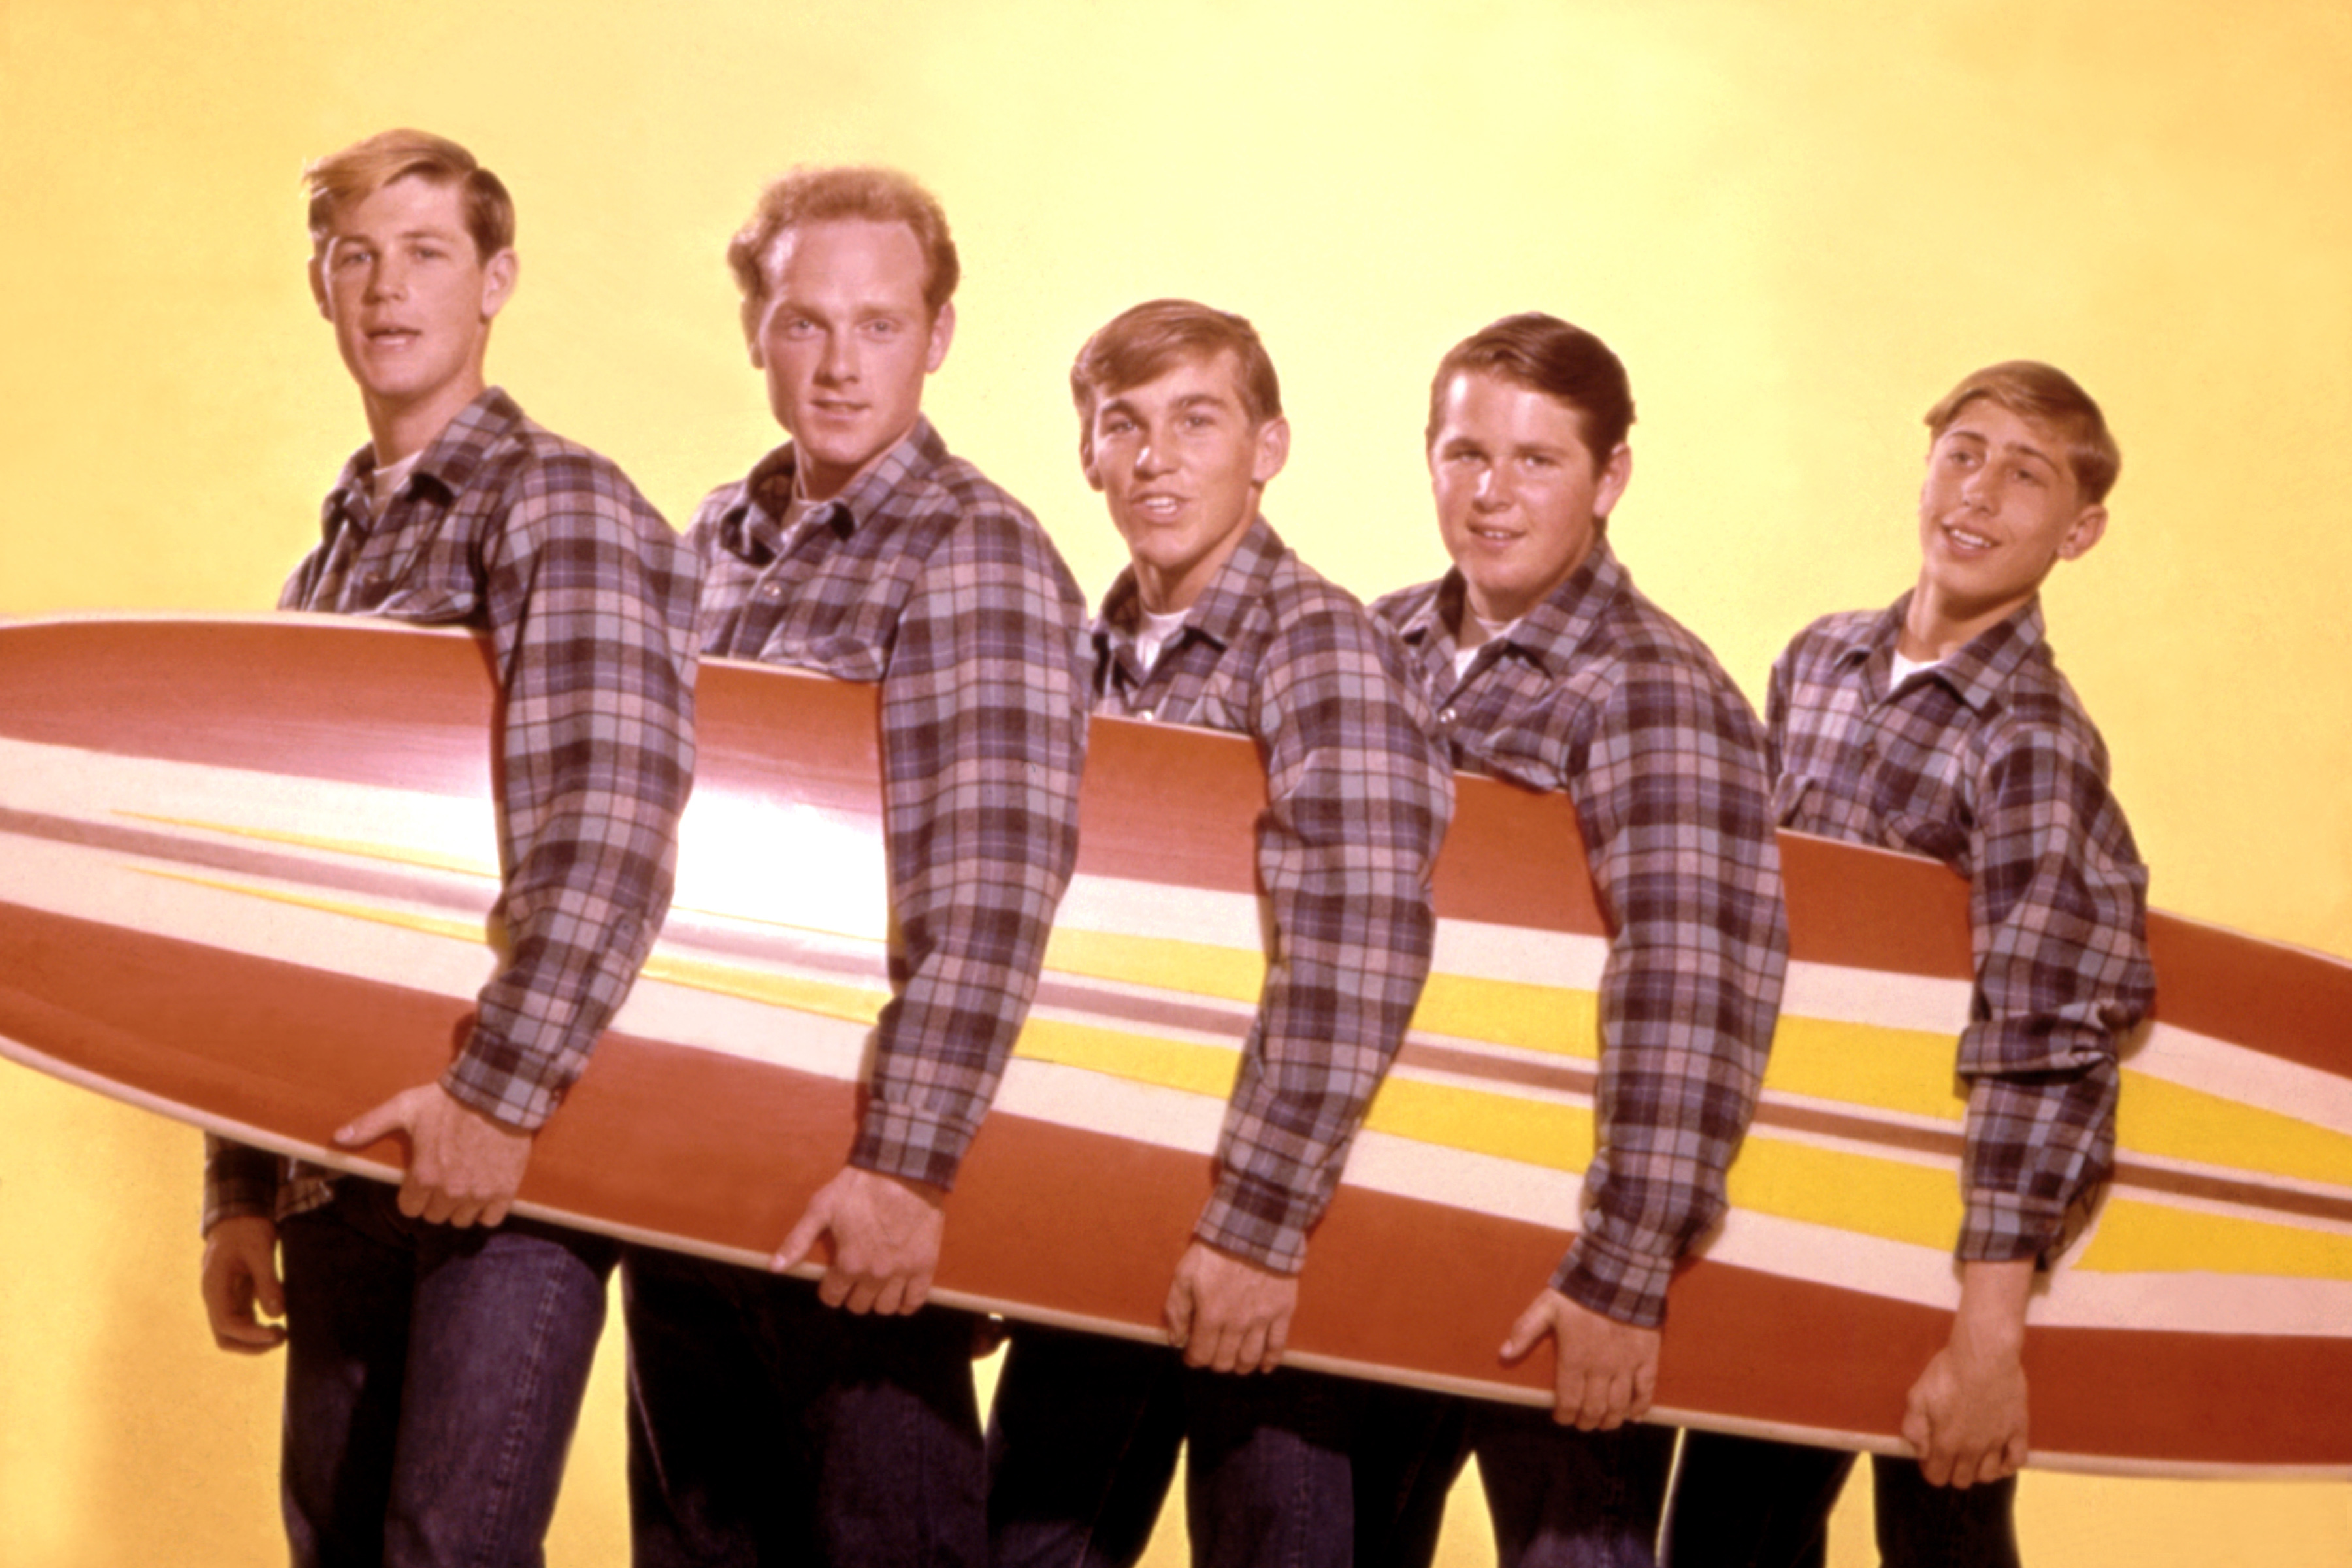 The Beach Boys’ Brian Wilson, Mike Love, Dennis Wilson, Carl Wilson, and David Marks holding a surf board